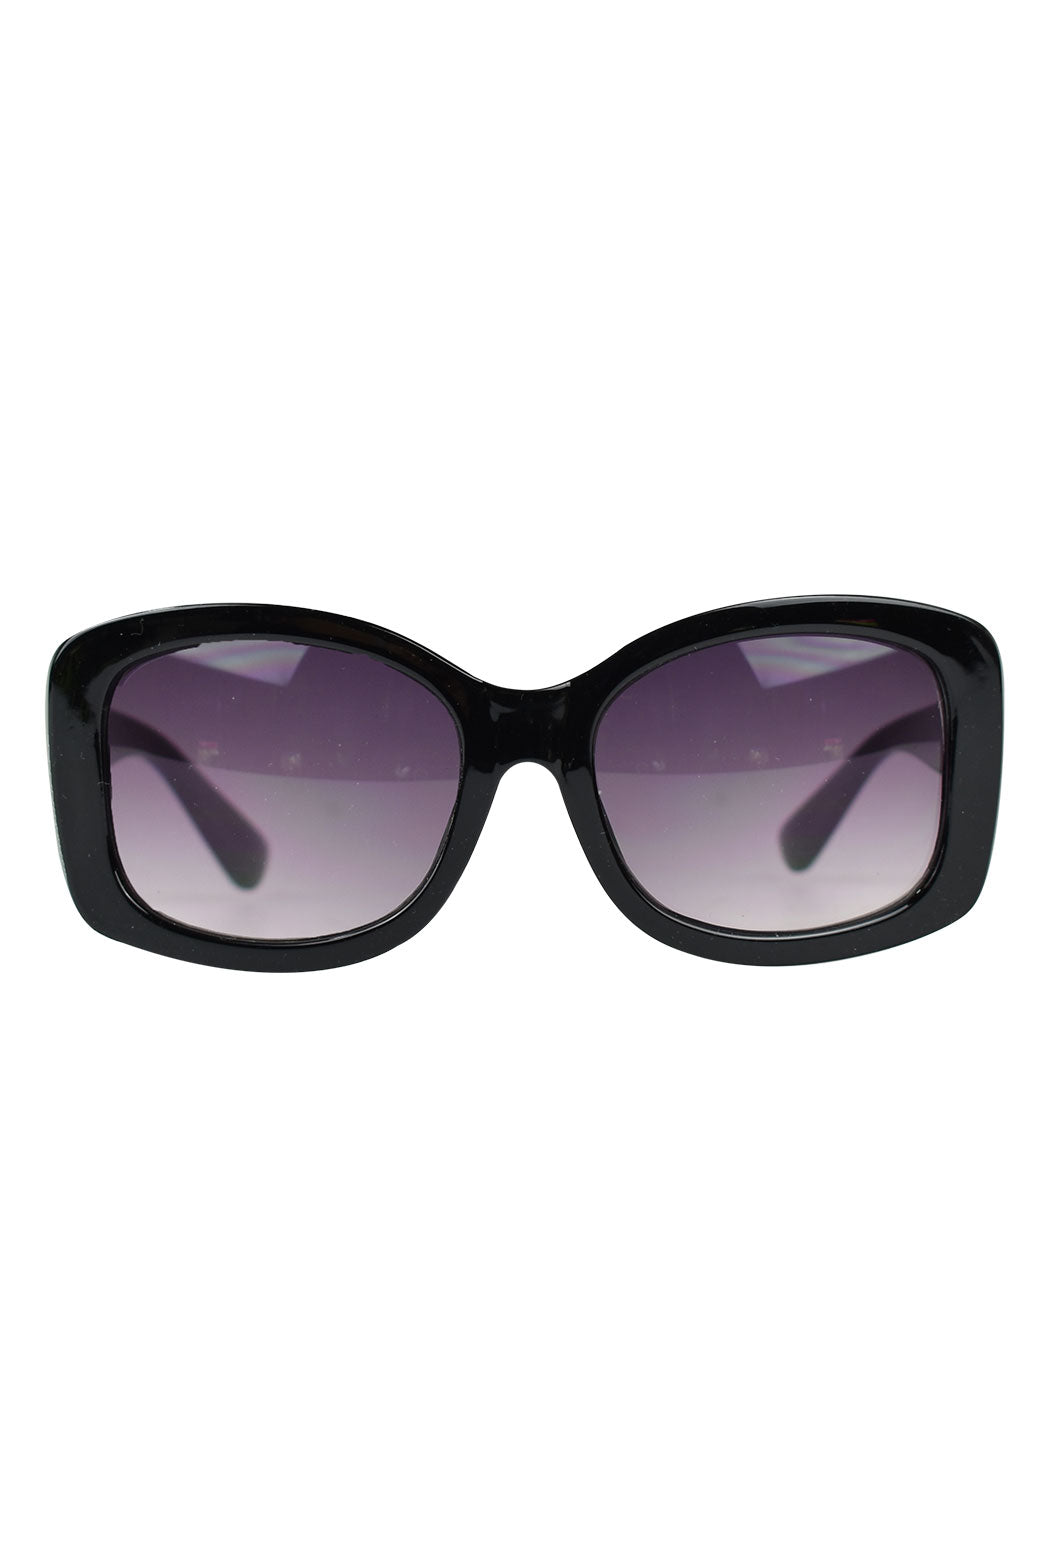 FINAL SALE Peta + Jain Tiffany Black Sunglasses